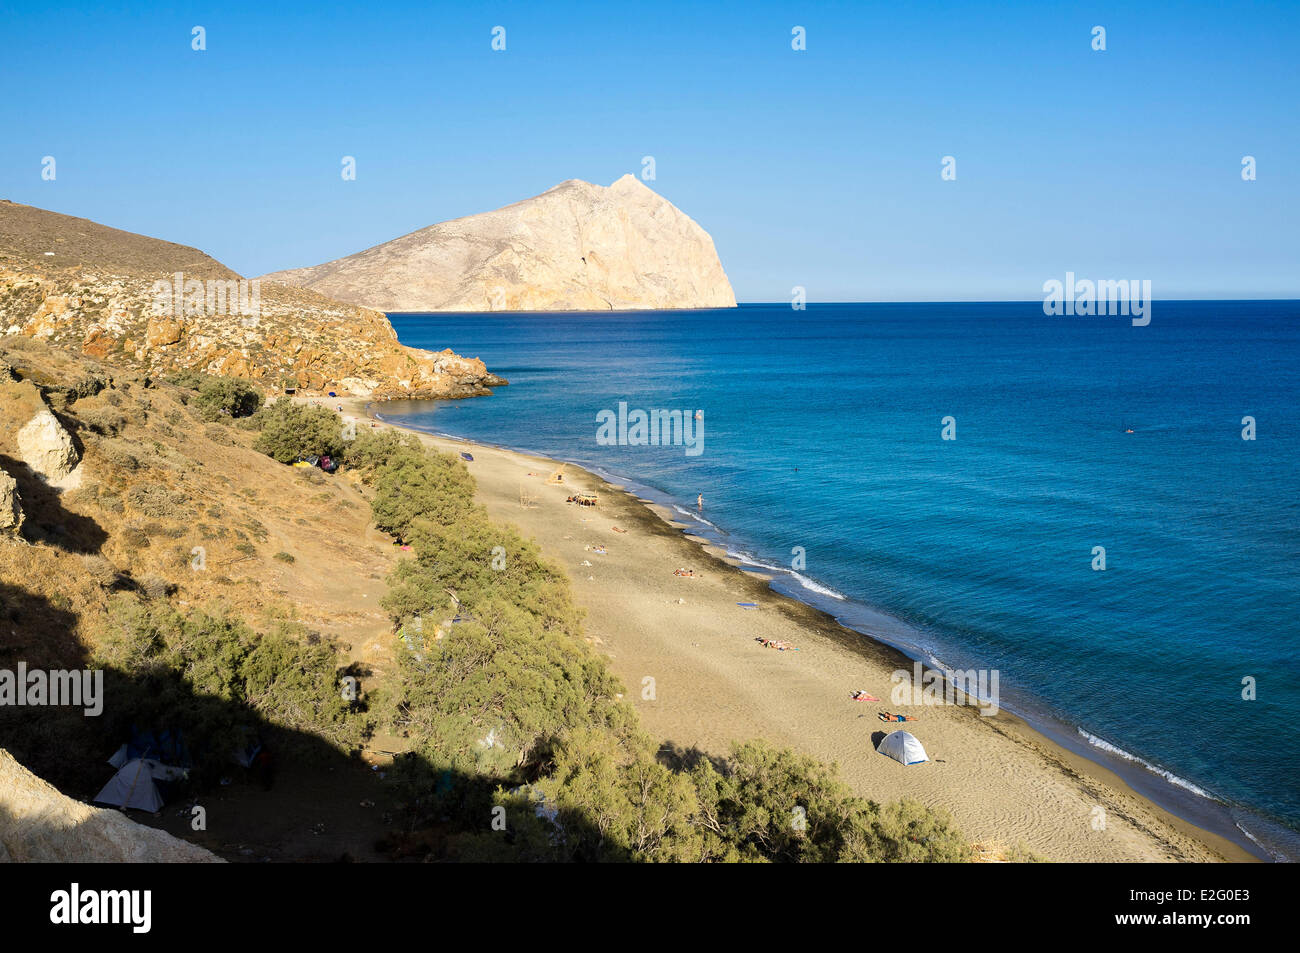 Greece Cyclades Islands Anafi Island Roukounas beach and Kalamos rock in the background Stock Photo